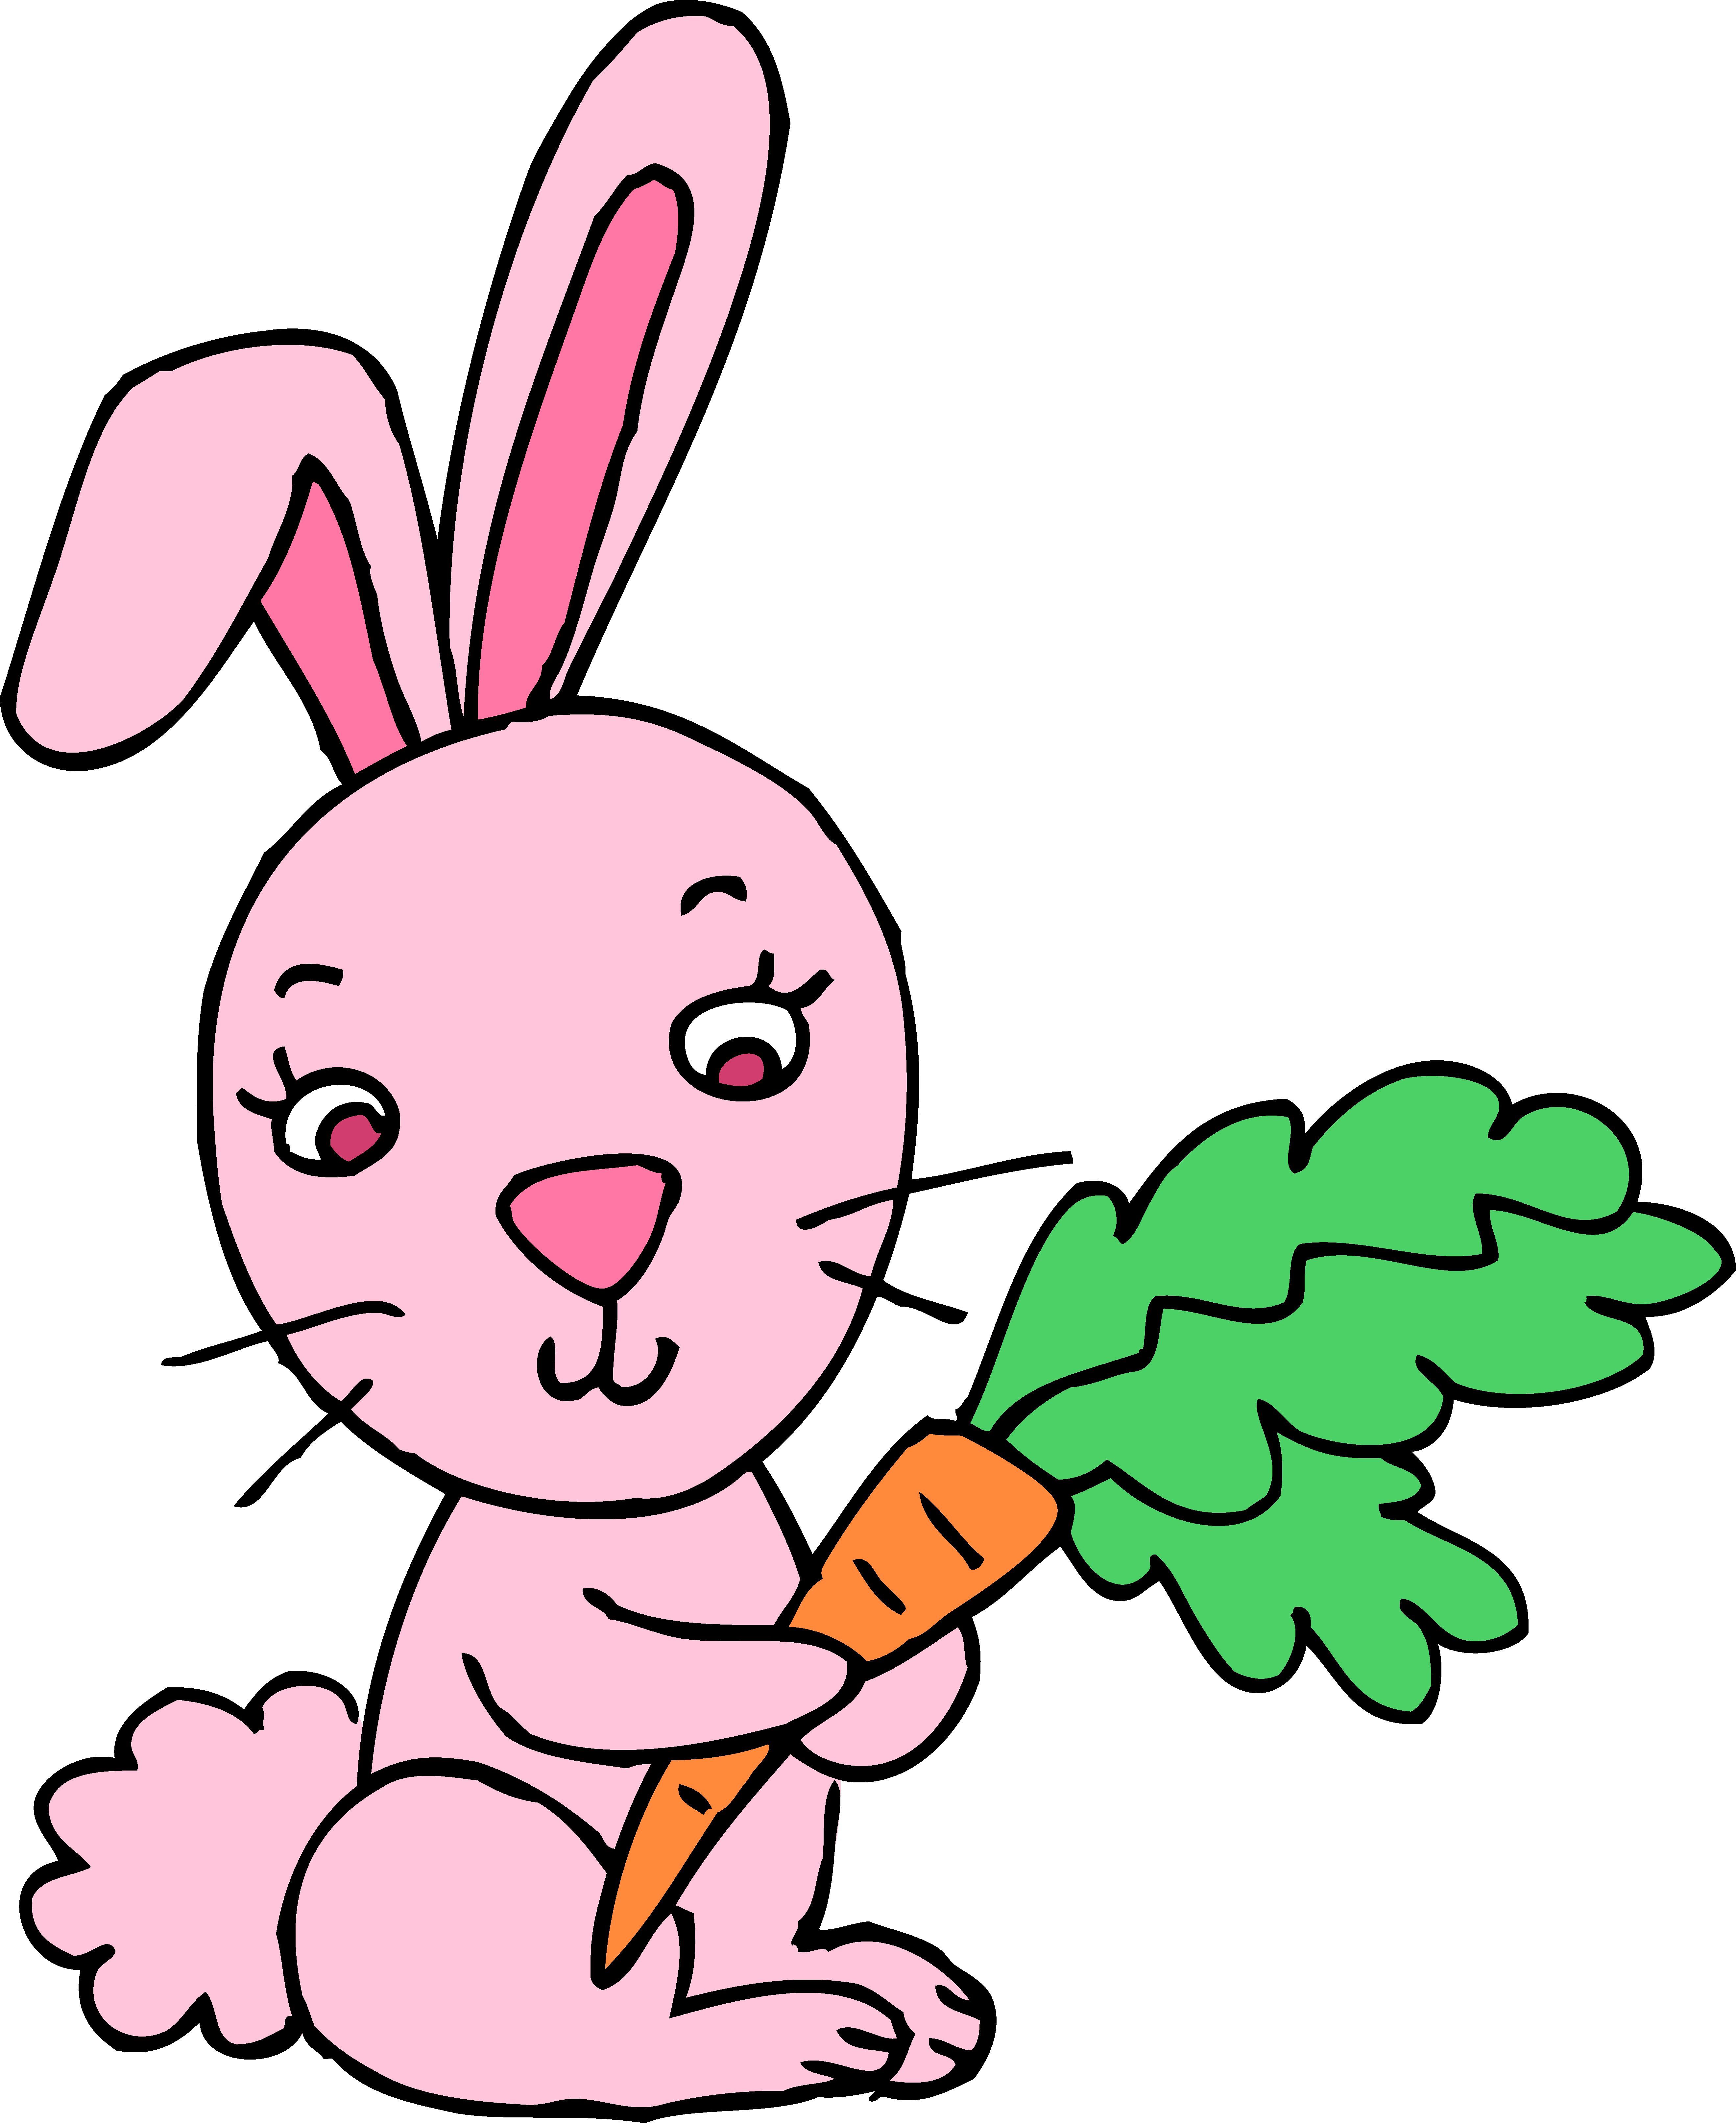 Rabbit clip art cute free clipart images clipartix